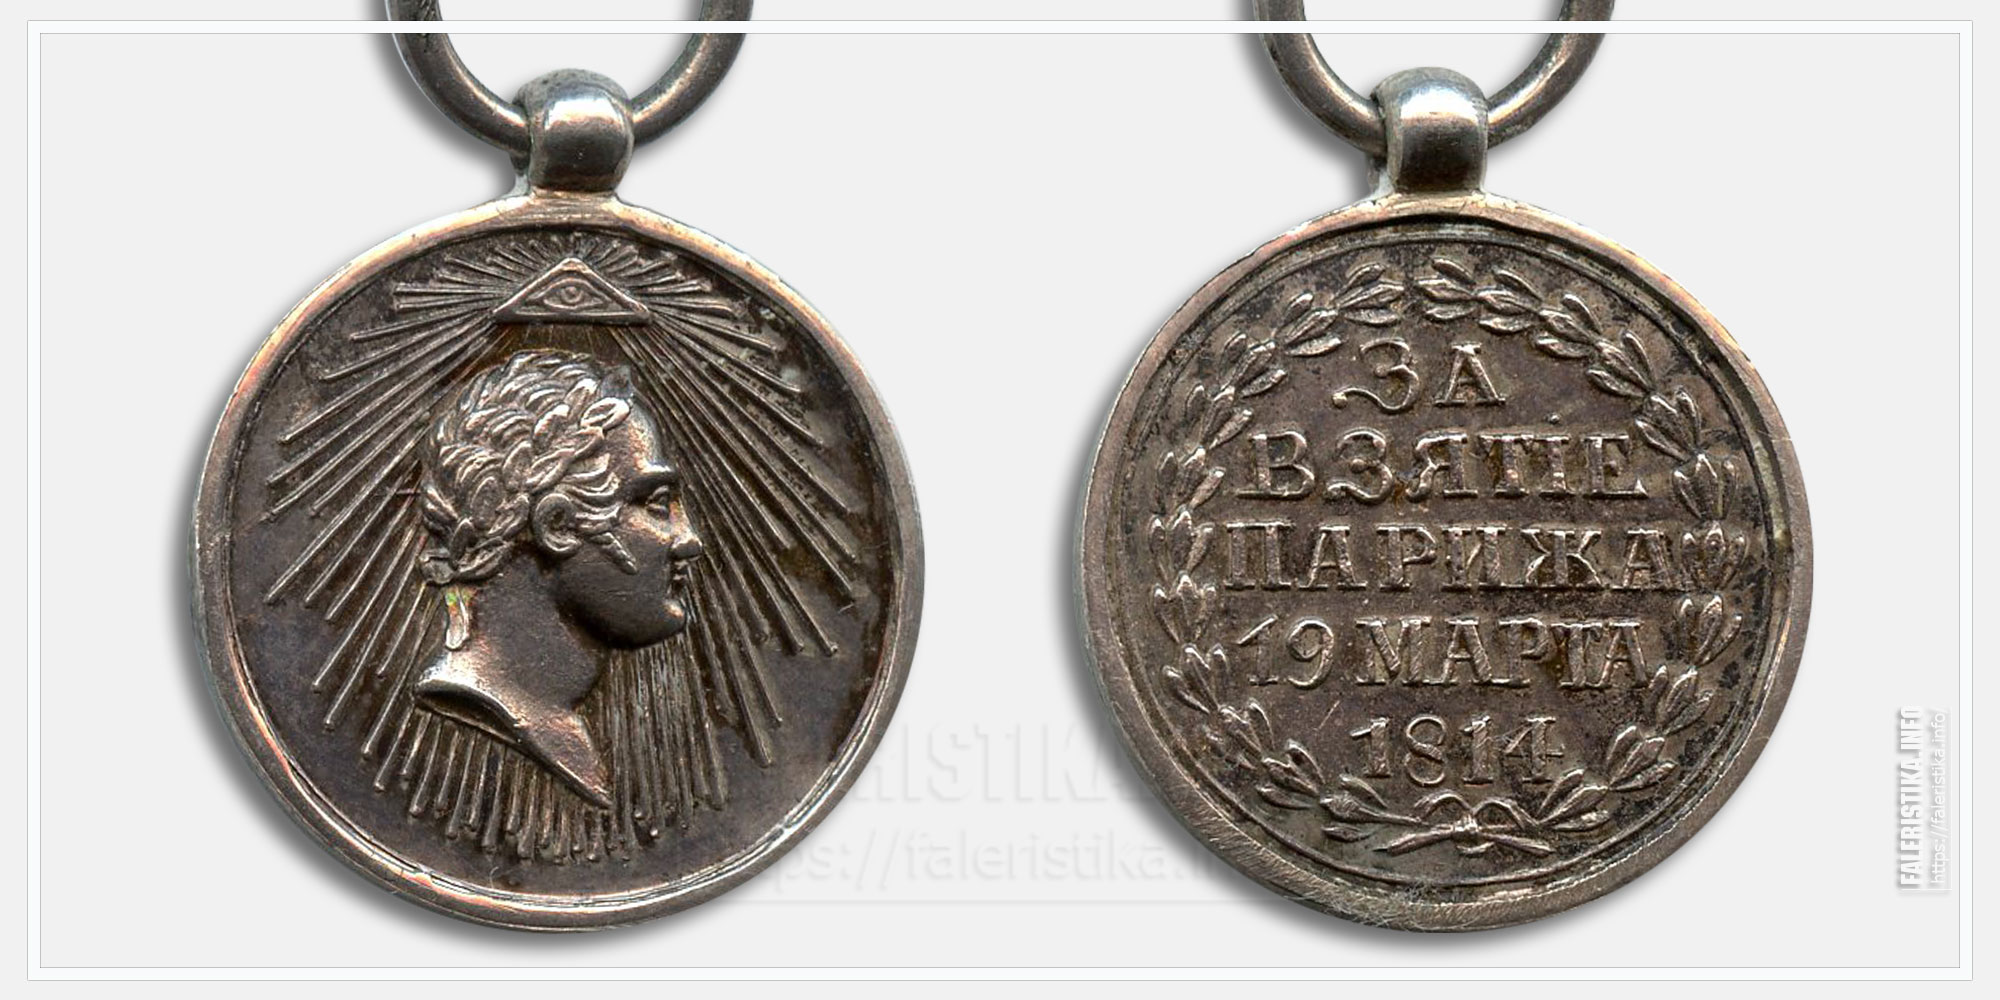 Медаль "За взятие Парижа 1814" (кавалерийская)